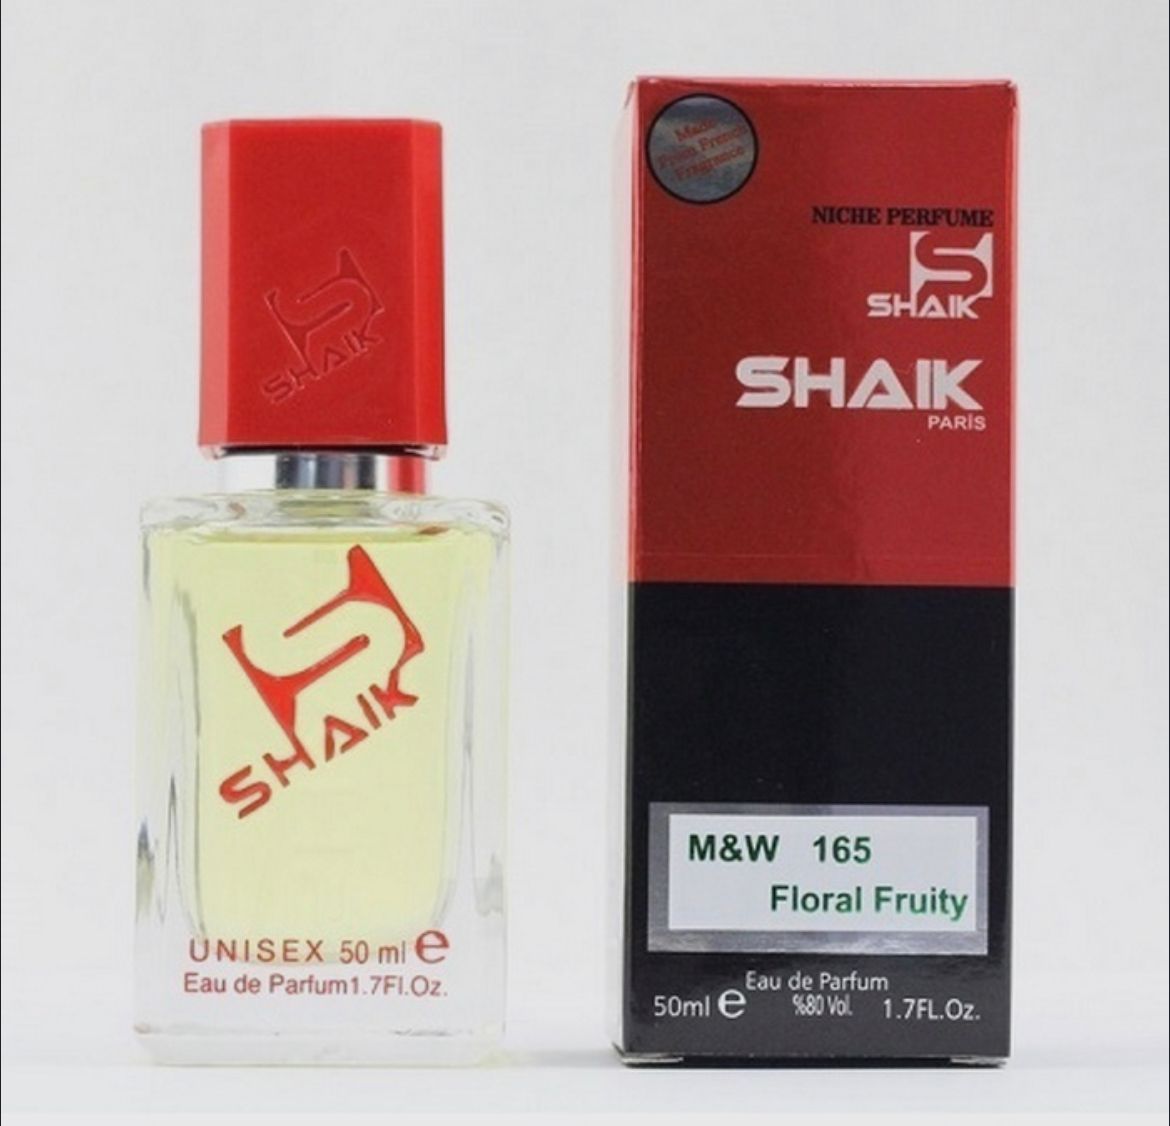 Shaik номерная парфюмерия 165